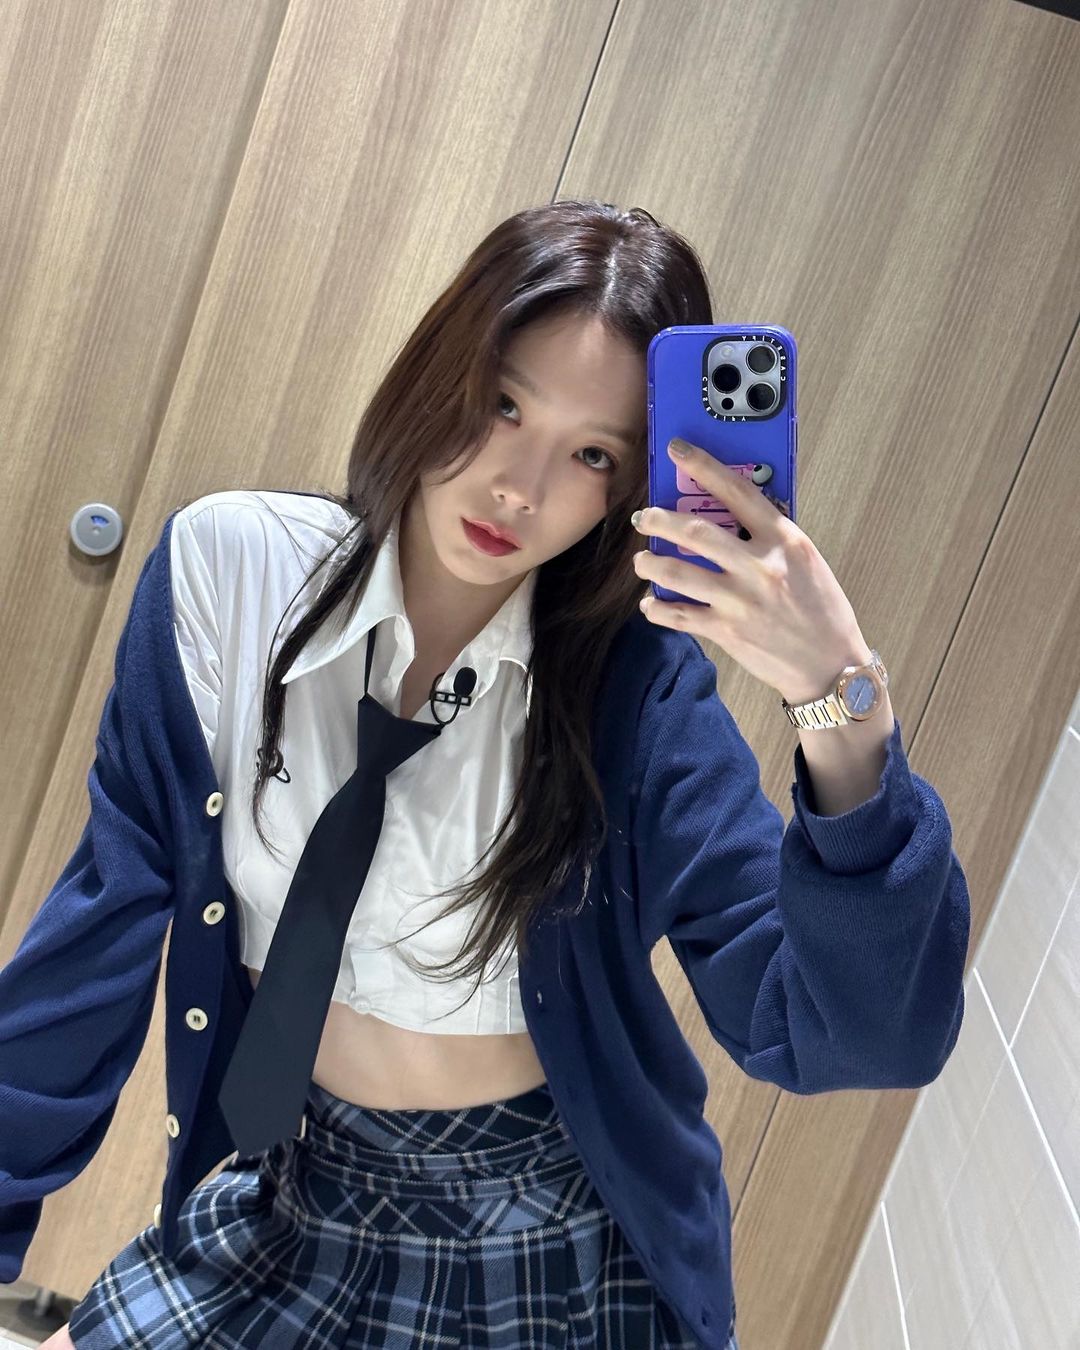 Taeyeon, cropped shirt + mini skirt for school look